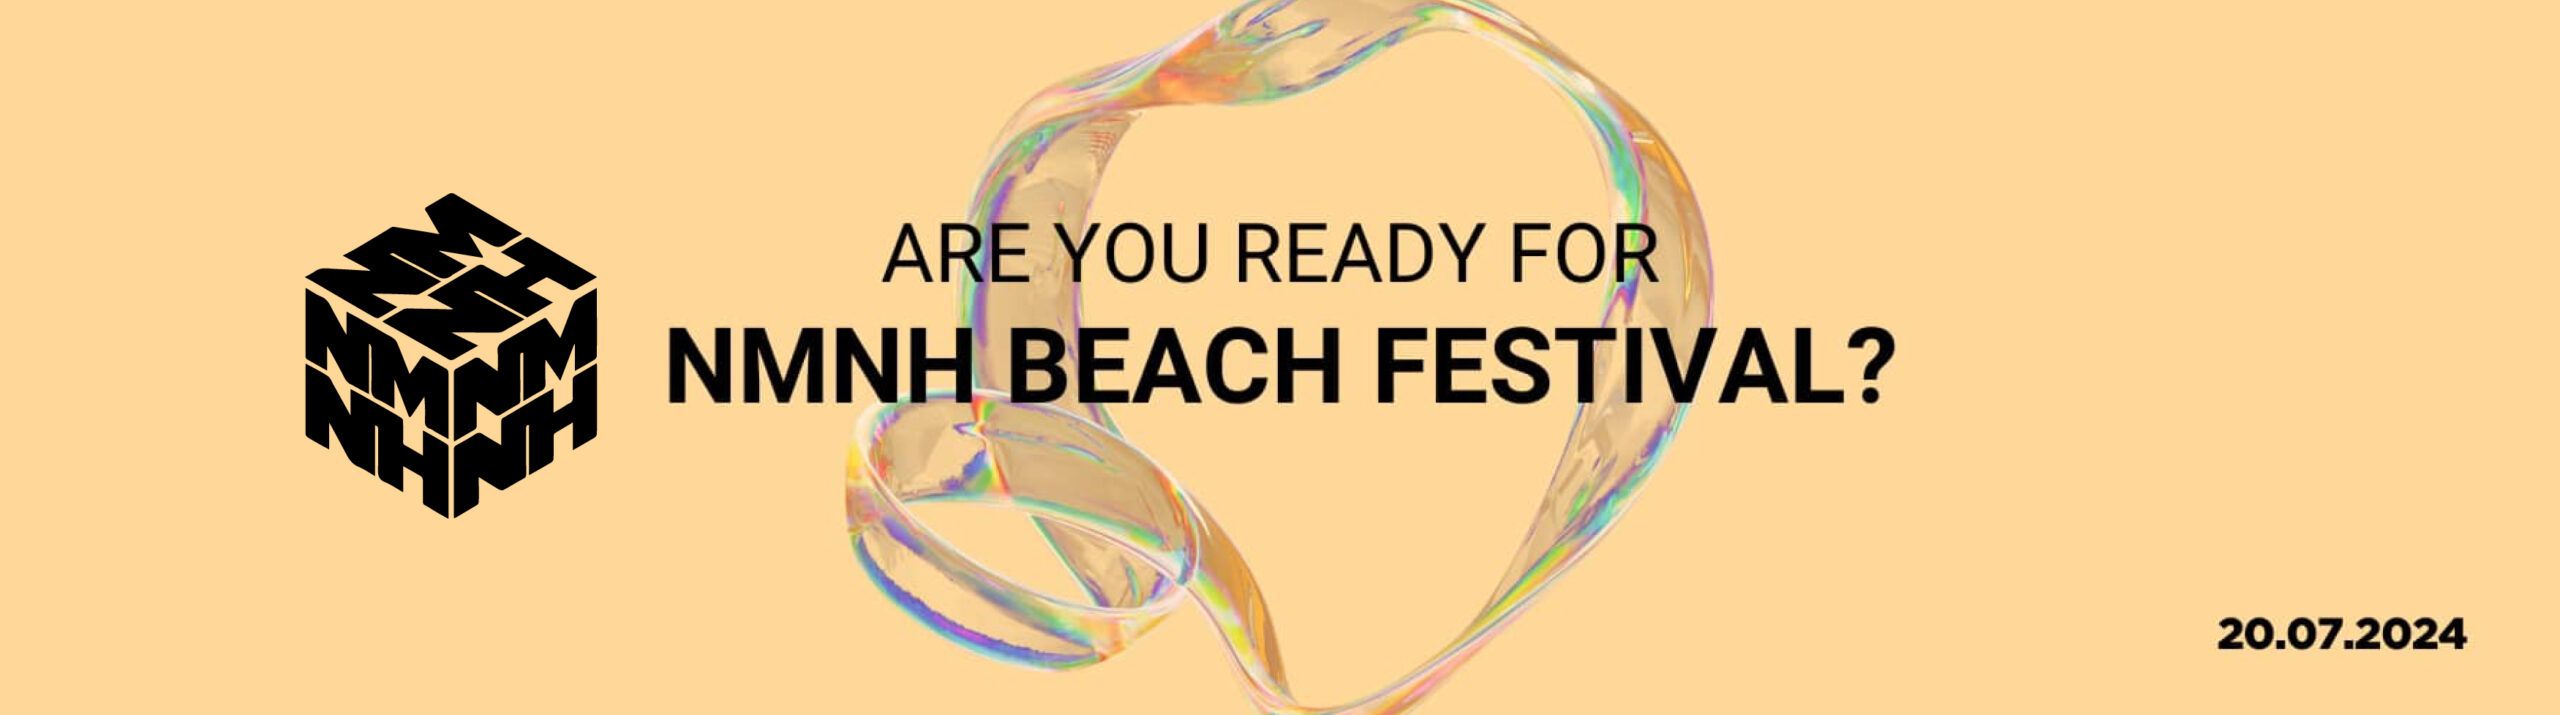 NMNH Beach Festival banner_large_desktop